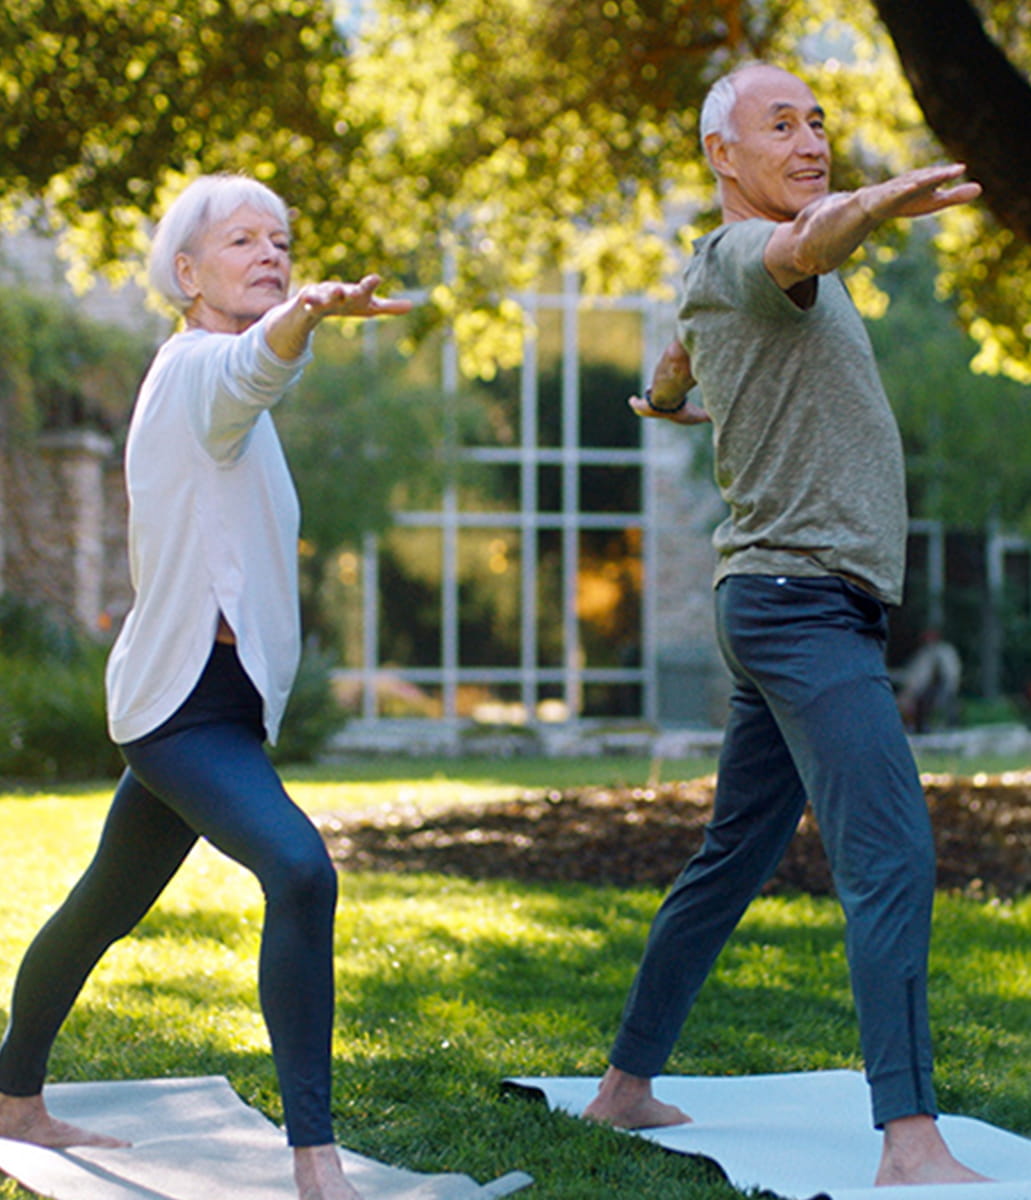 Two people doing outdoor yoga